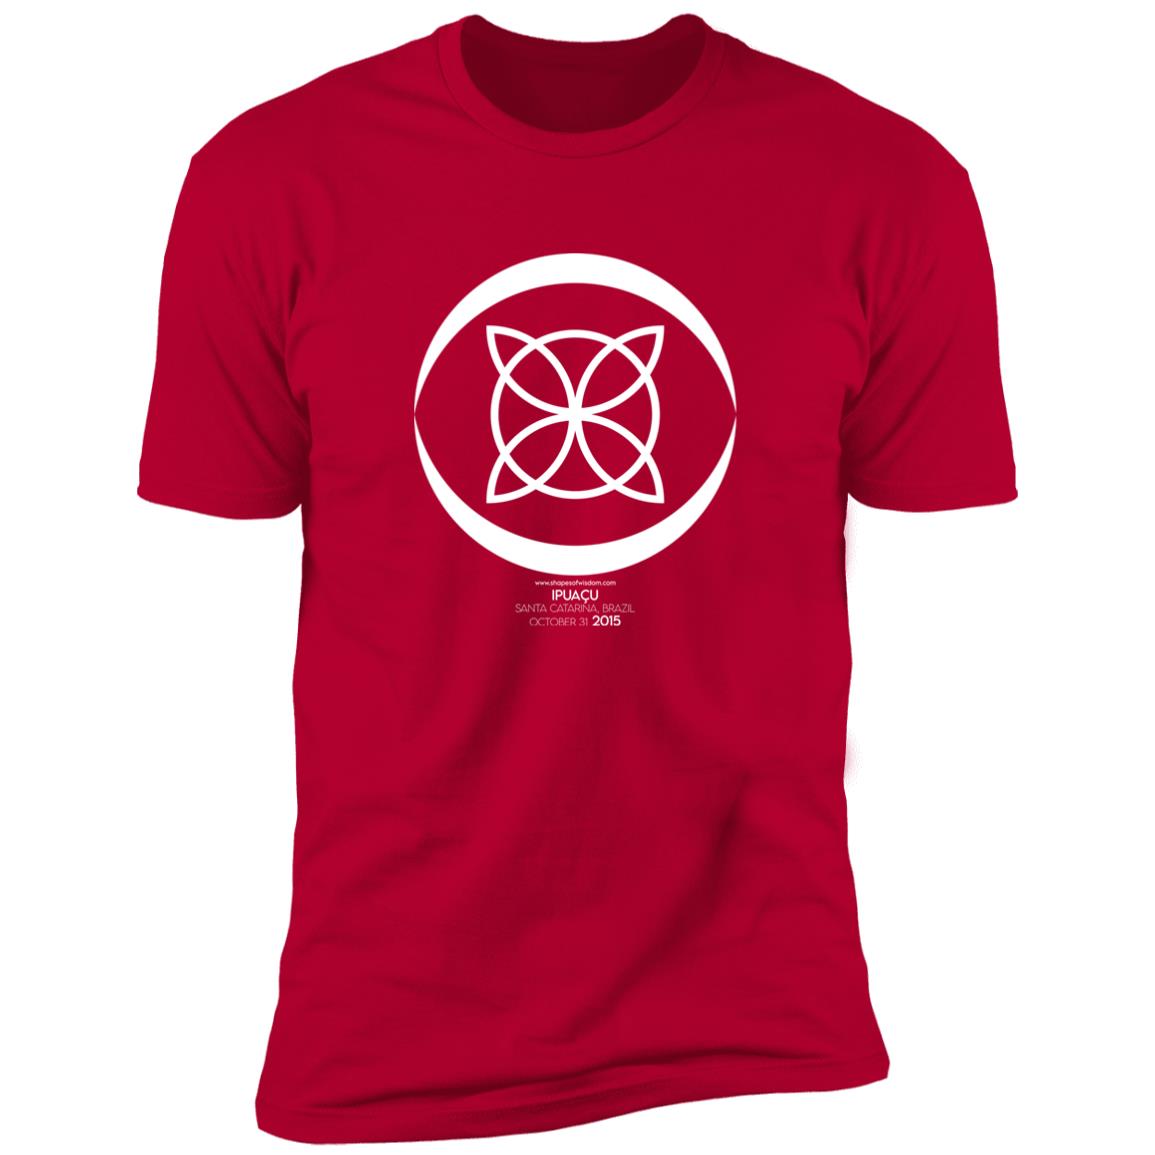 Crop Circle Premium T-Shirt - Ipuaçu 2